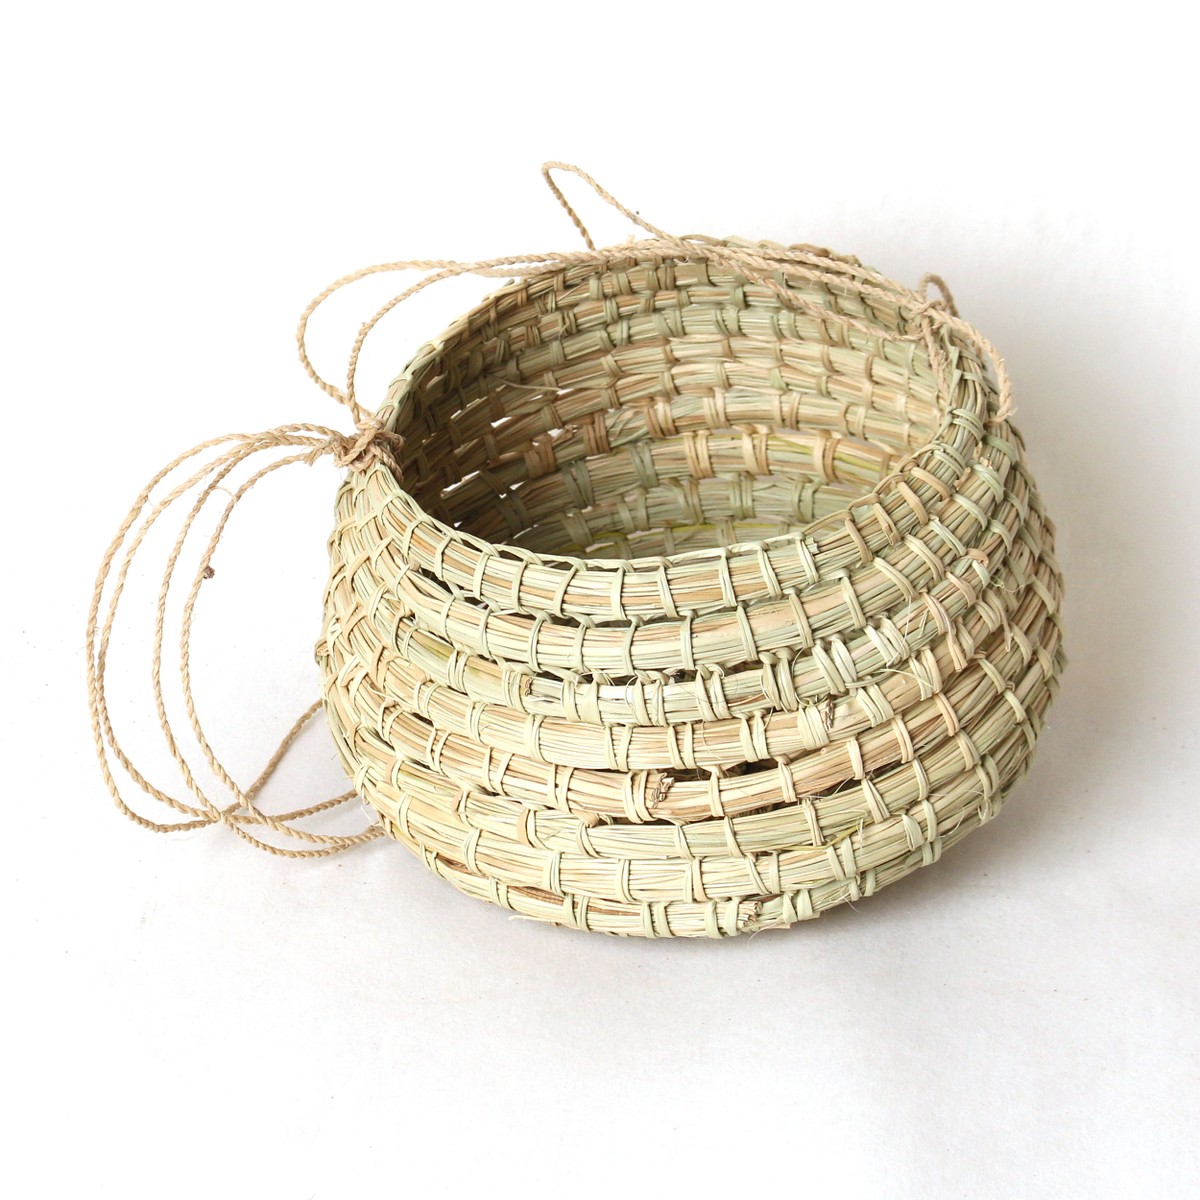 Basket by Helen Galinung Batjiku Wunungmurra